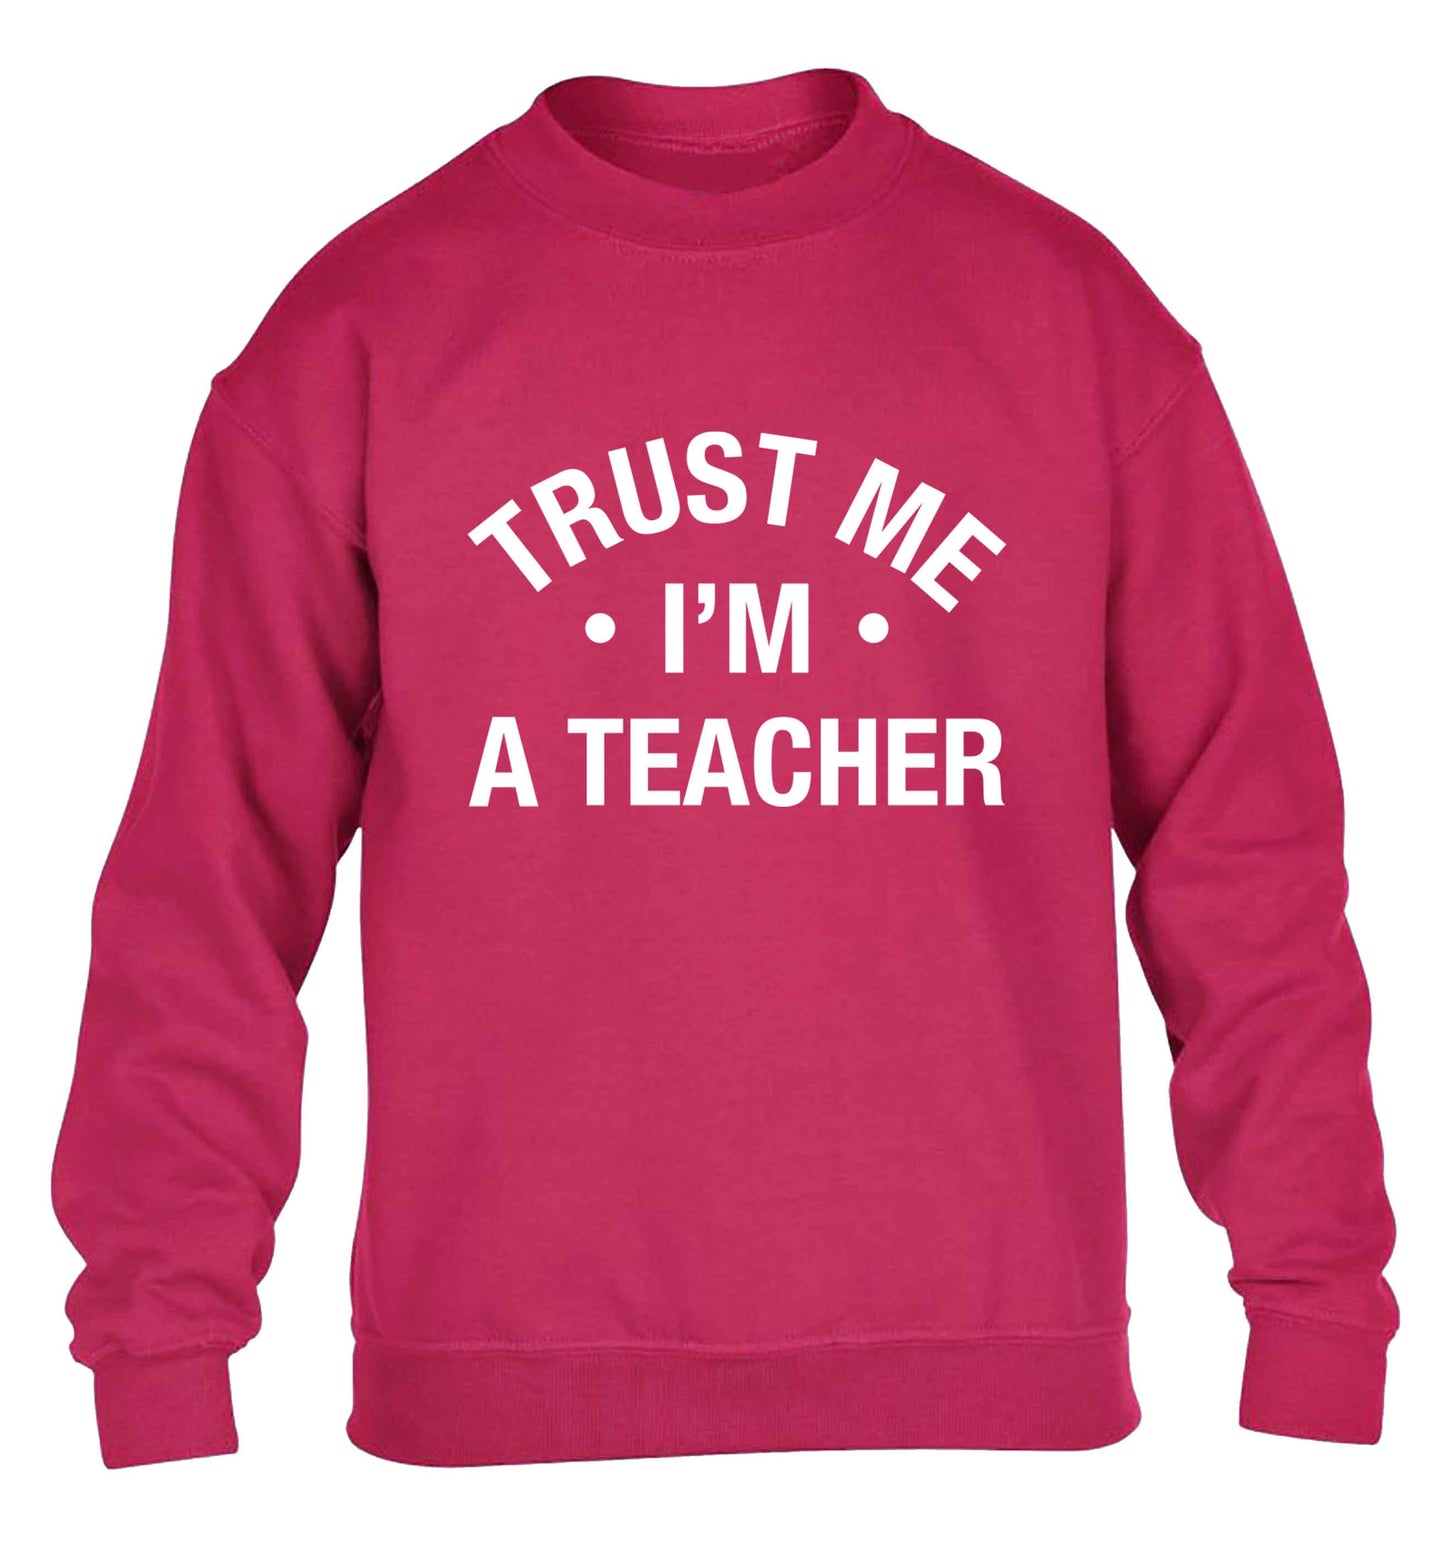 Trust me I'm a teacher children's pink sweater 12-13 Years